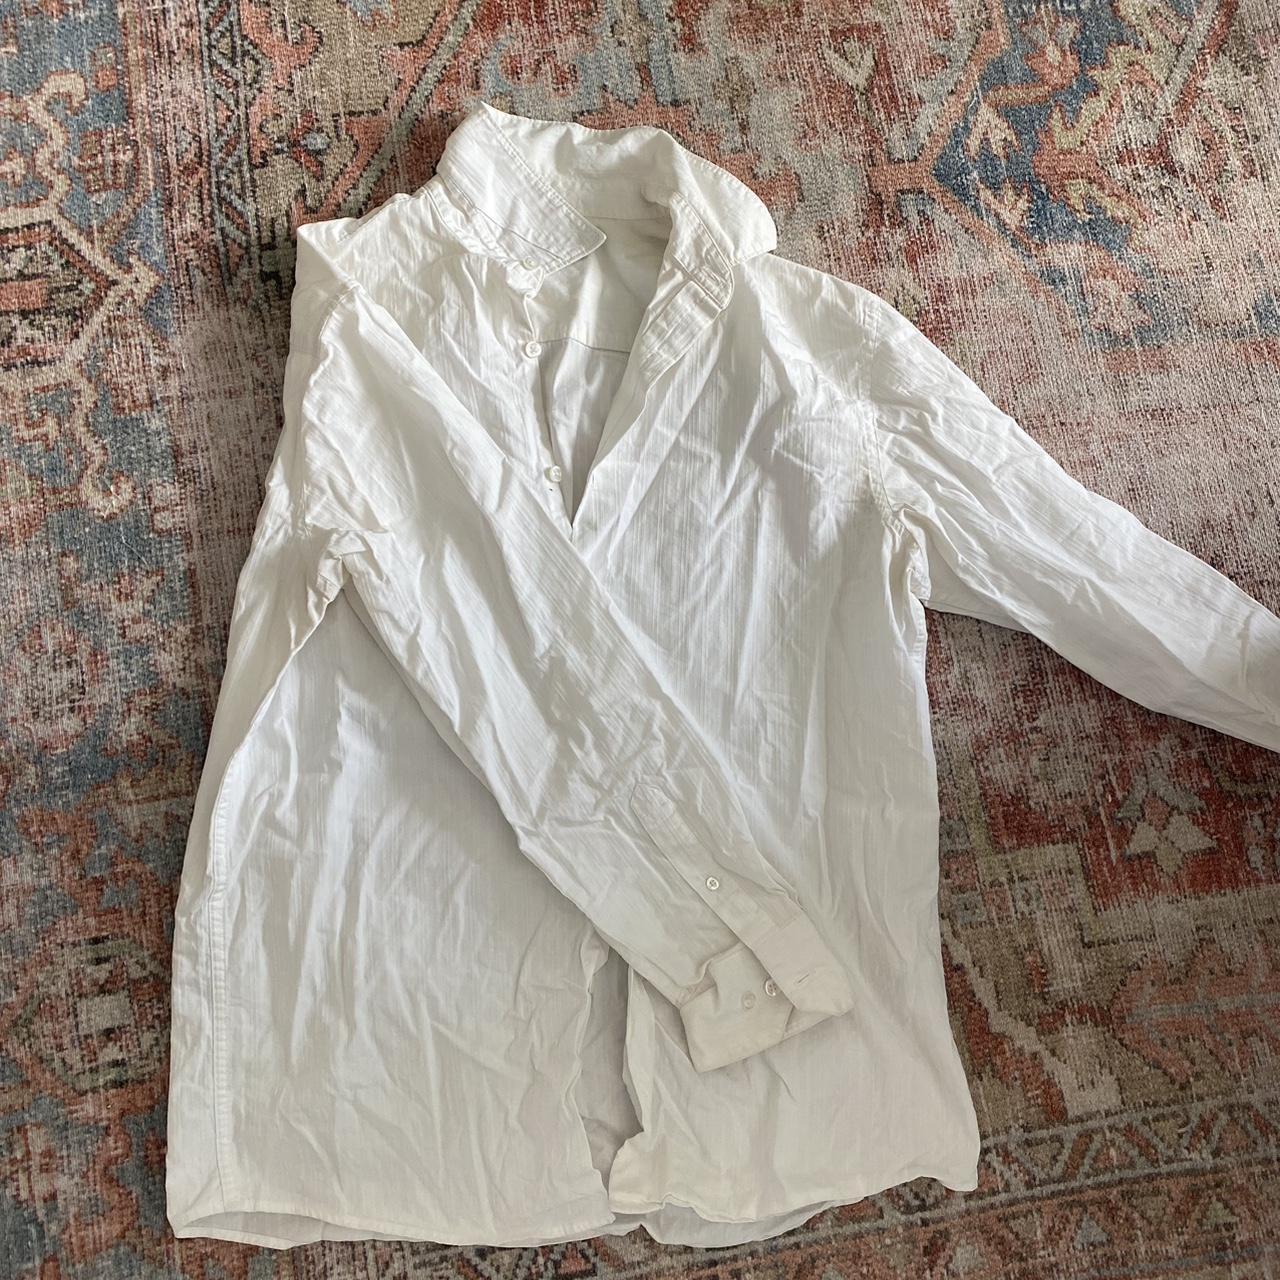 Liz Claiborne Women's White Shirt | Depop